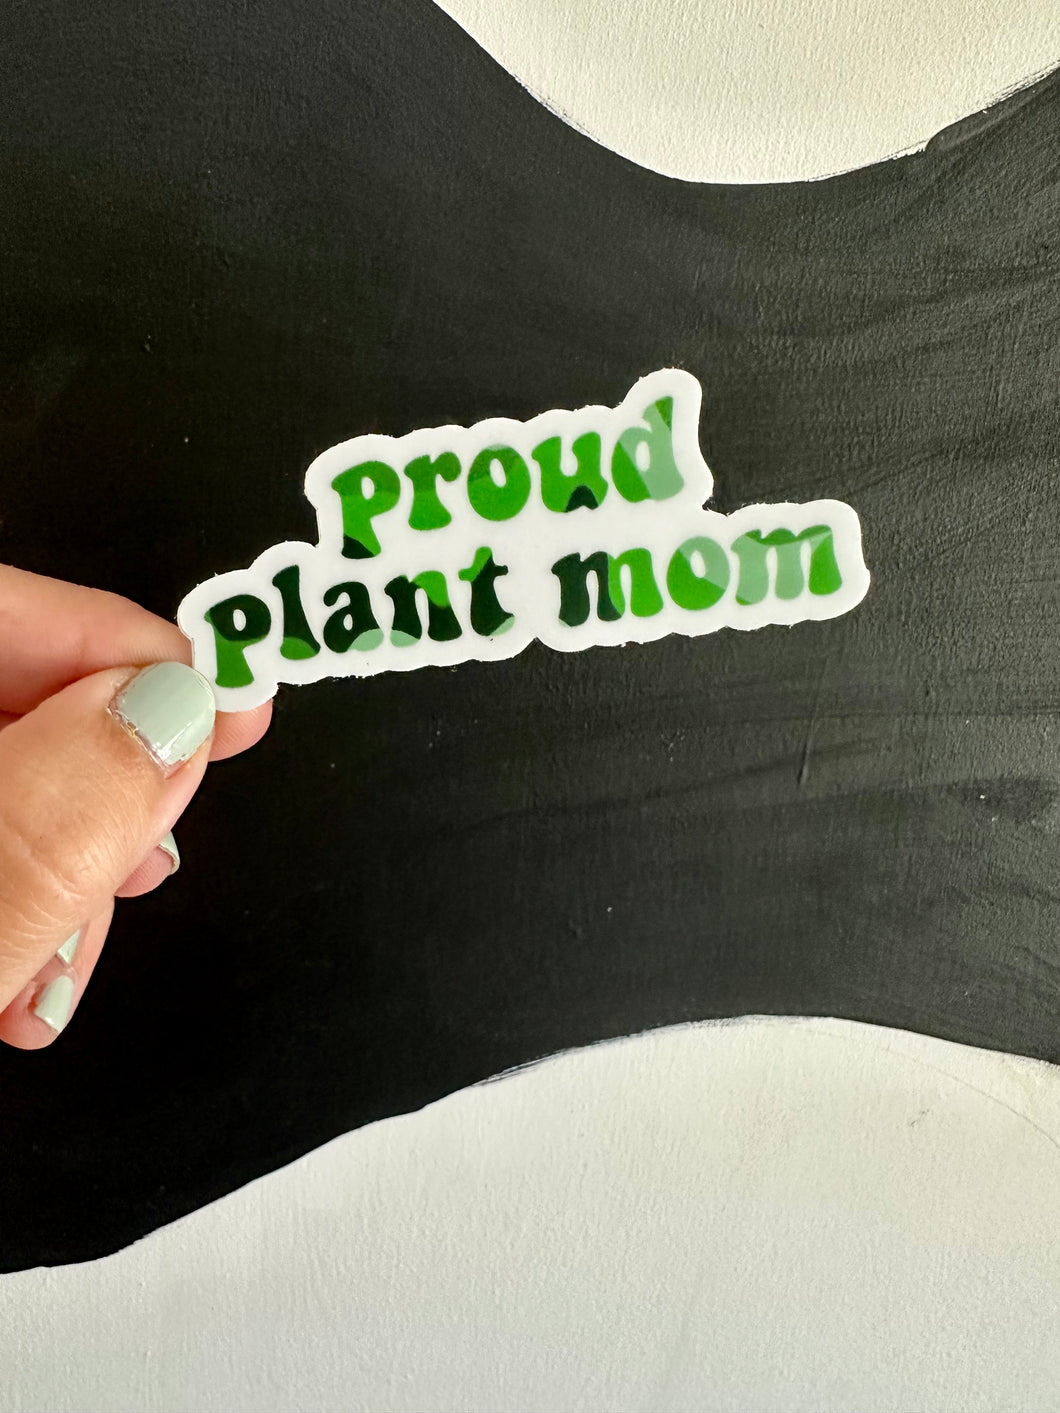 Proud Plant Mom Sticker